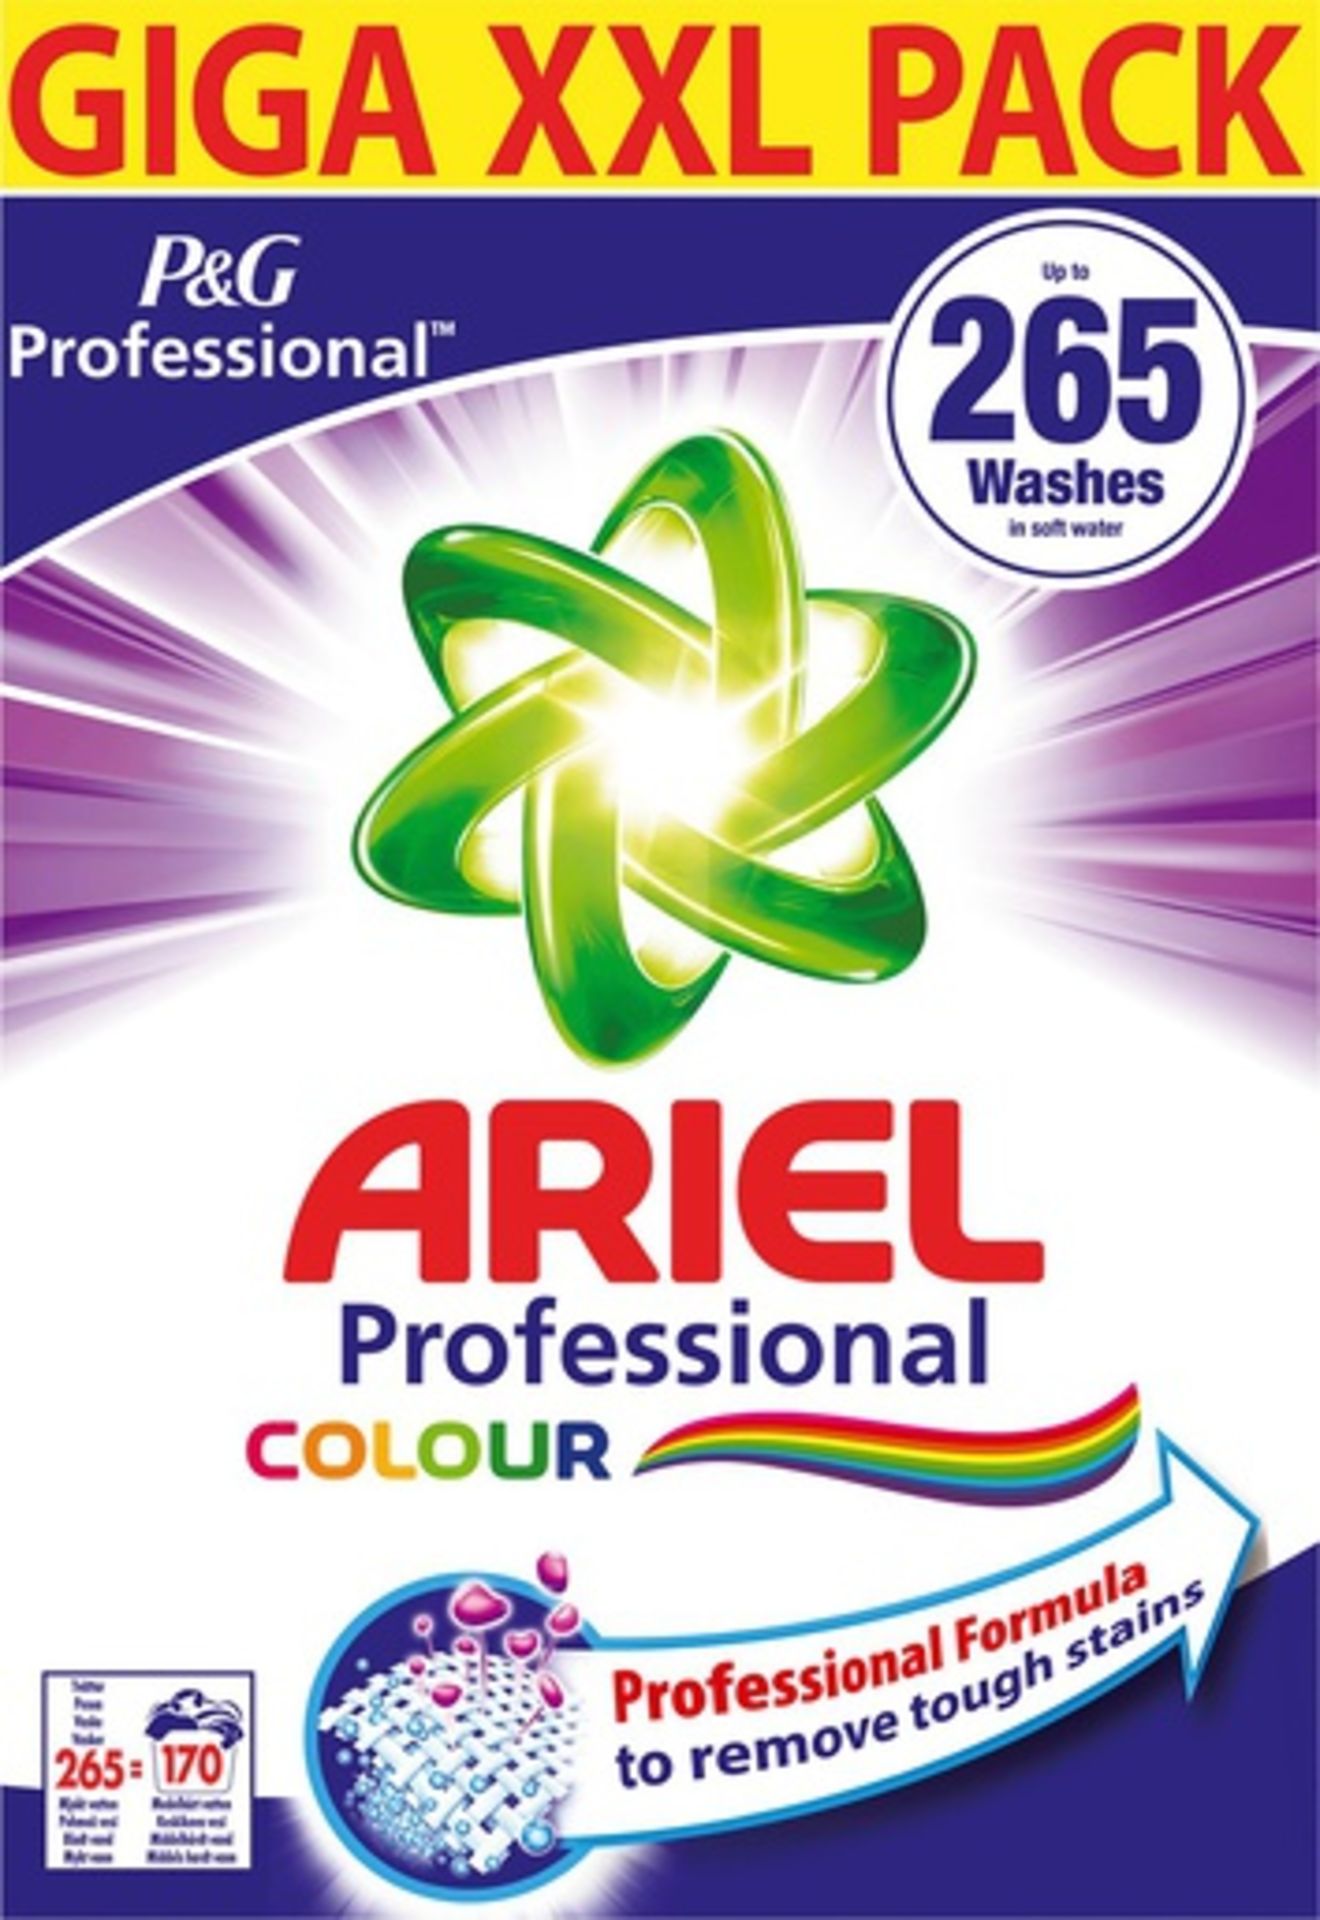 V *TRADE QTY* Brand New Ariel Professional 7.1Kg Colour Washing Powder X 4 YOUR BID PRICE TO BE